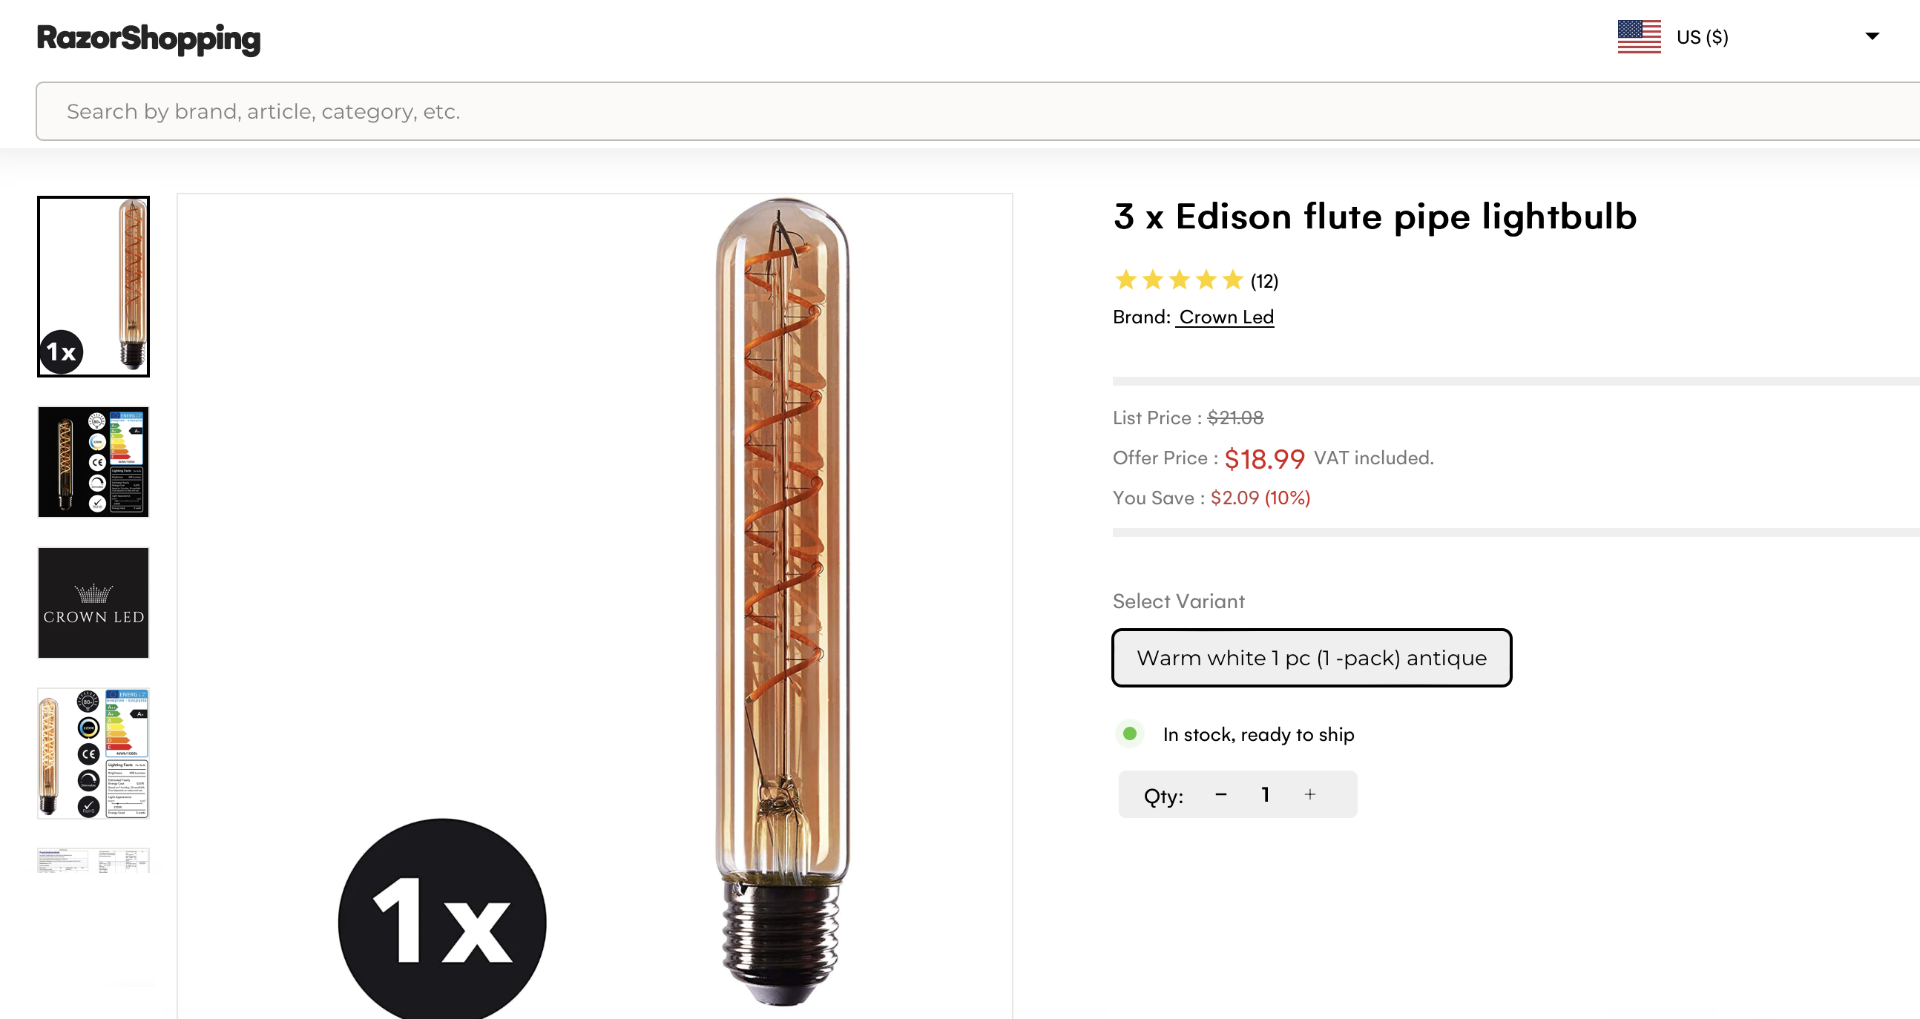 6 x CROWN LED Edison Flat Pipe Lightbulb 4W/40W Warm White - NEW & BOXED - BIG RRP! - Image 2 of 8